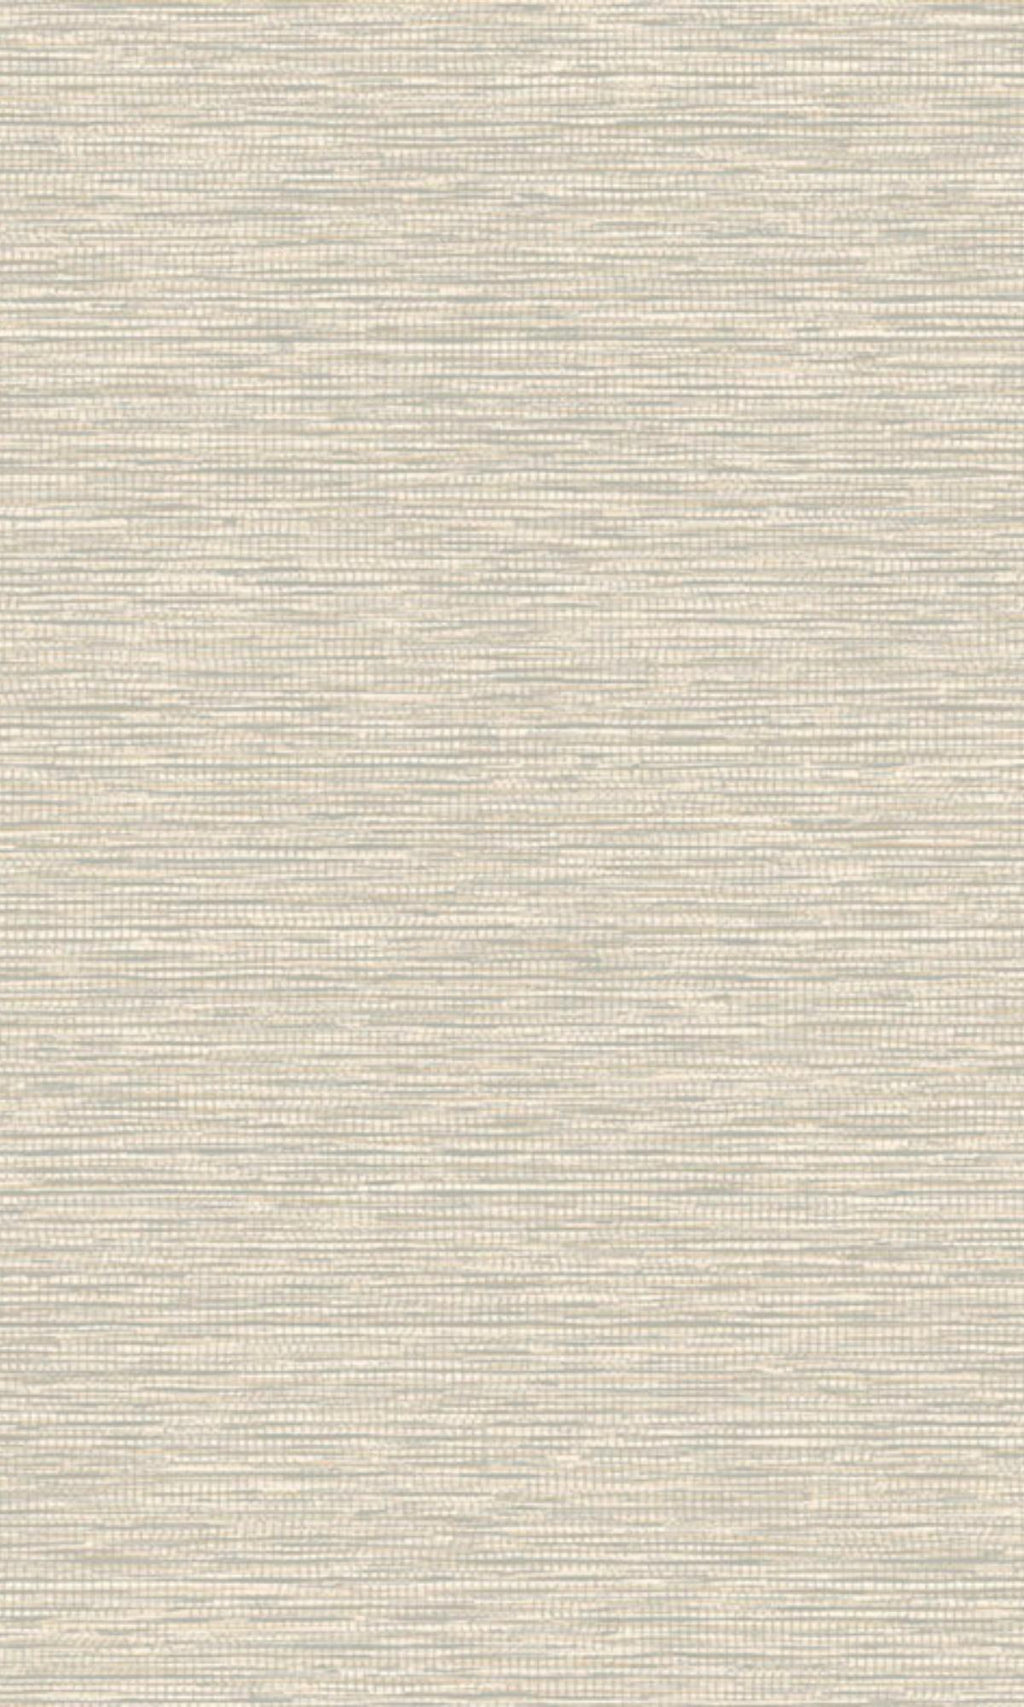 Perla Jomon Grasscloth Light Grey NHW1012